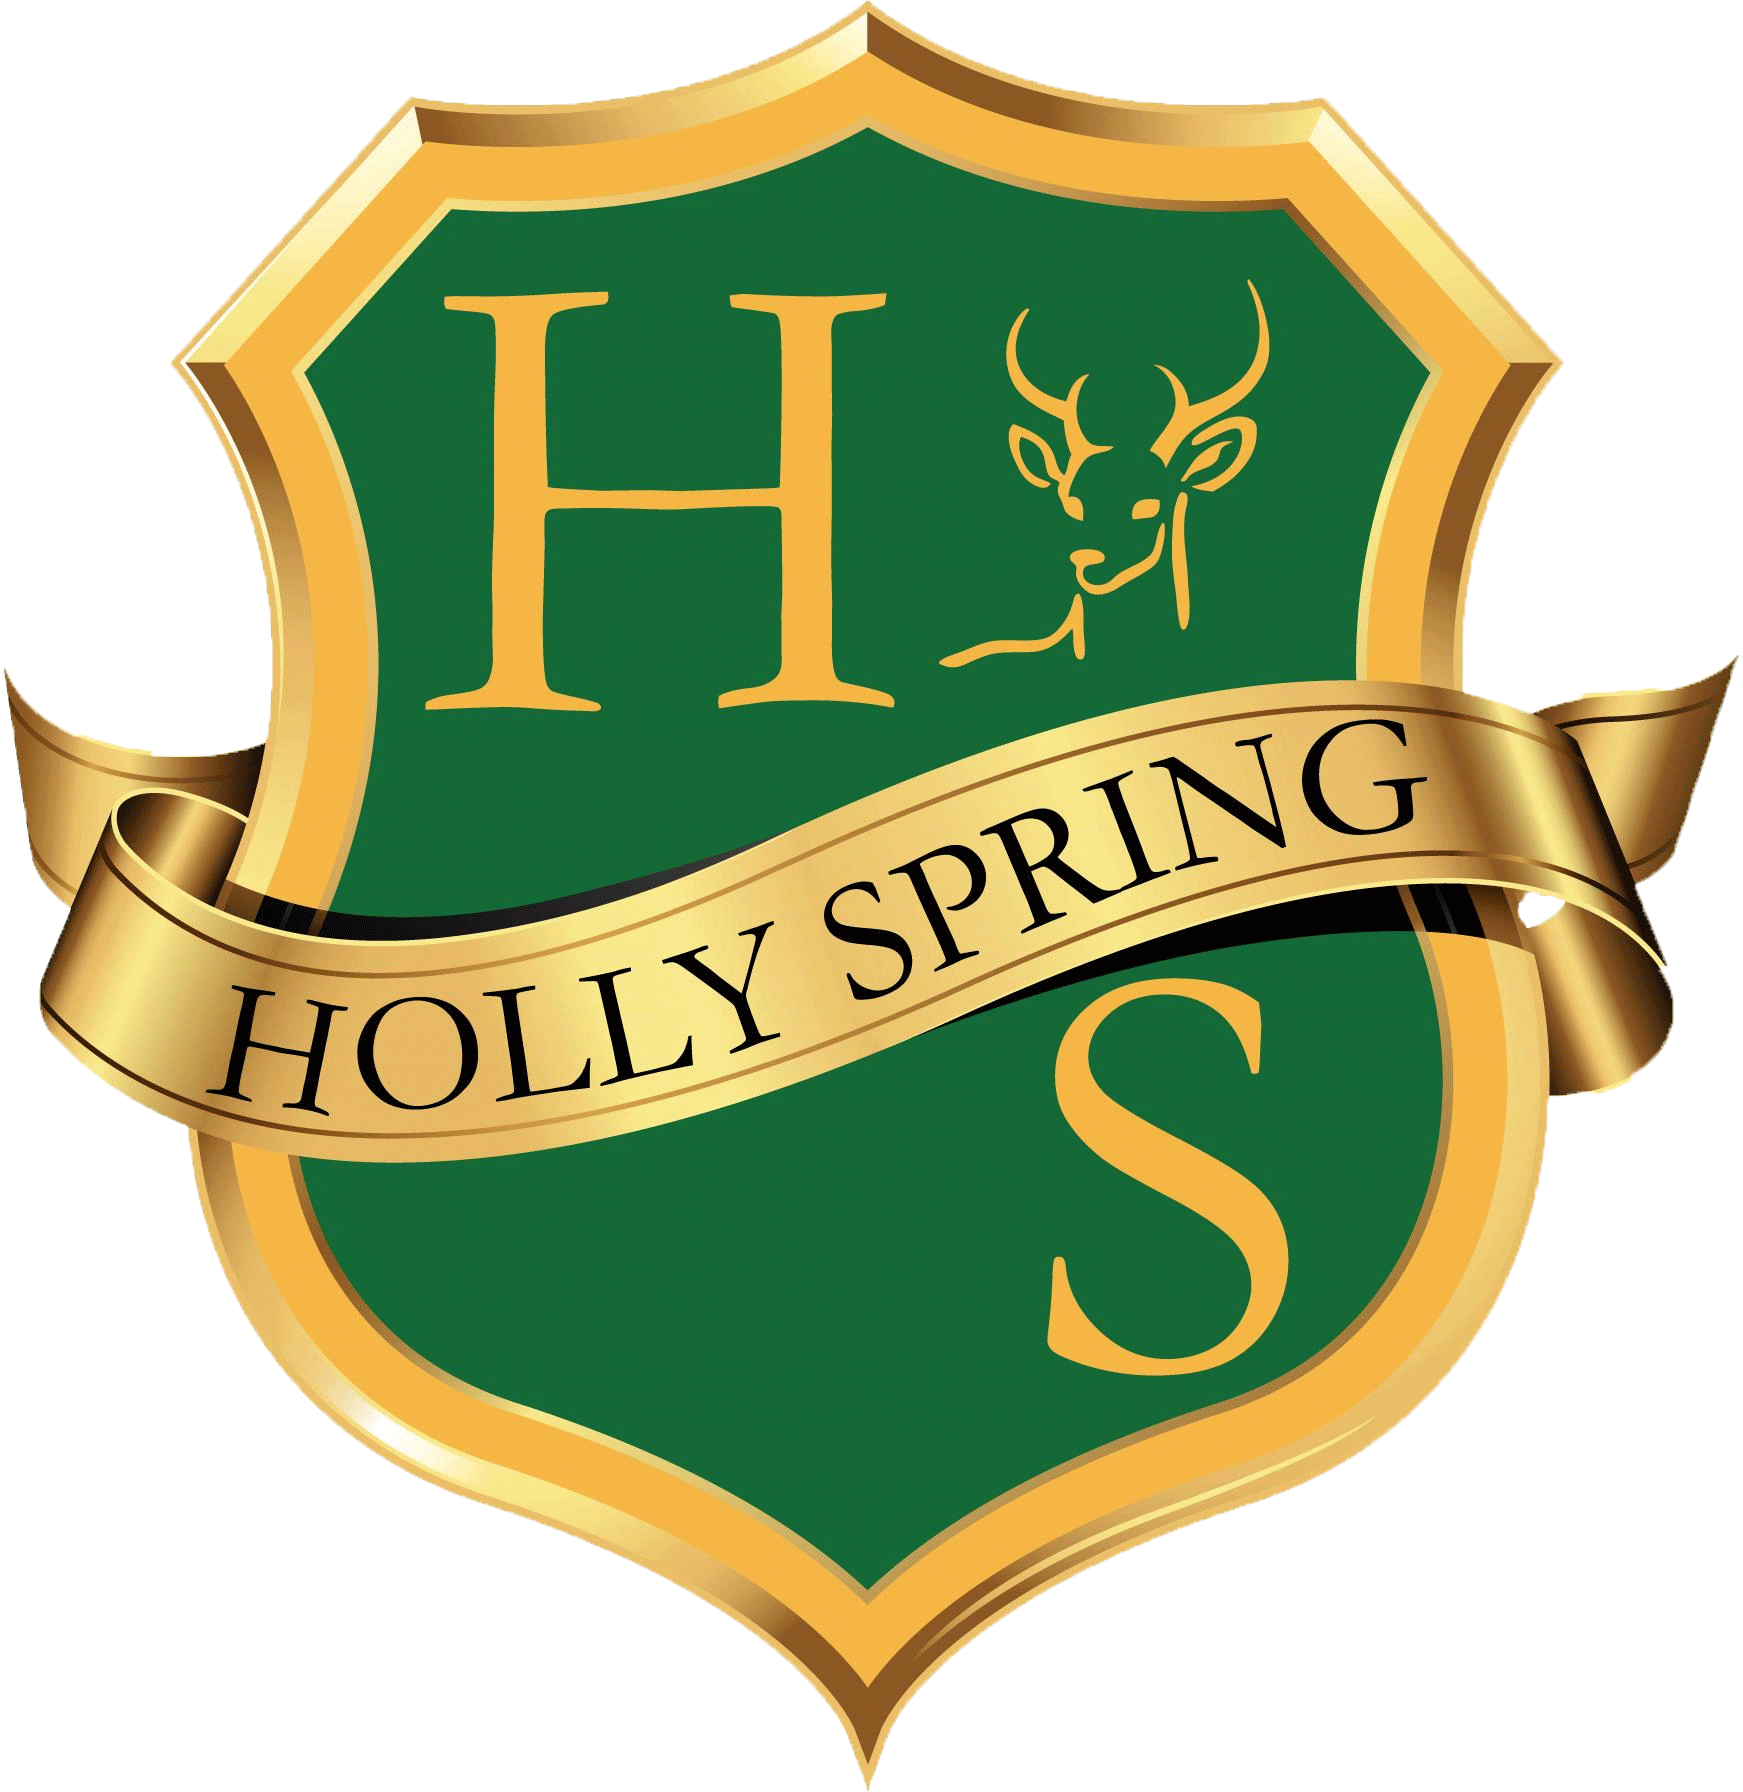 Holly Spring